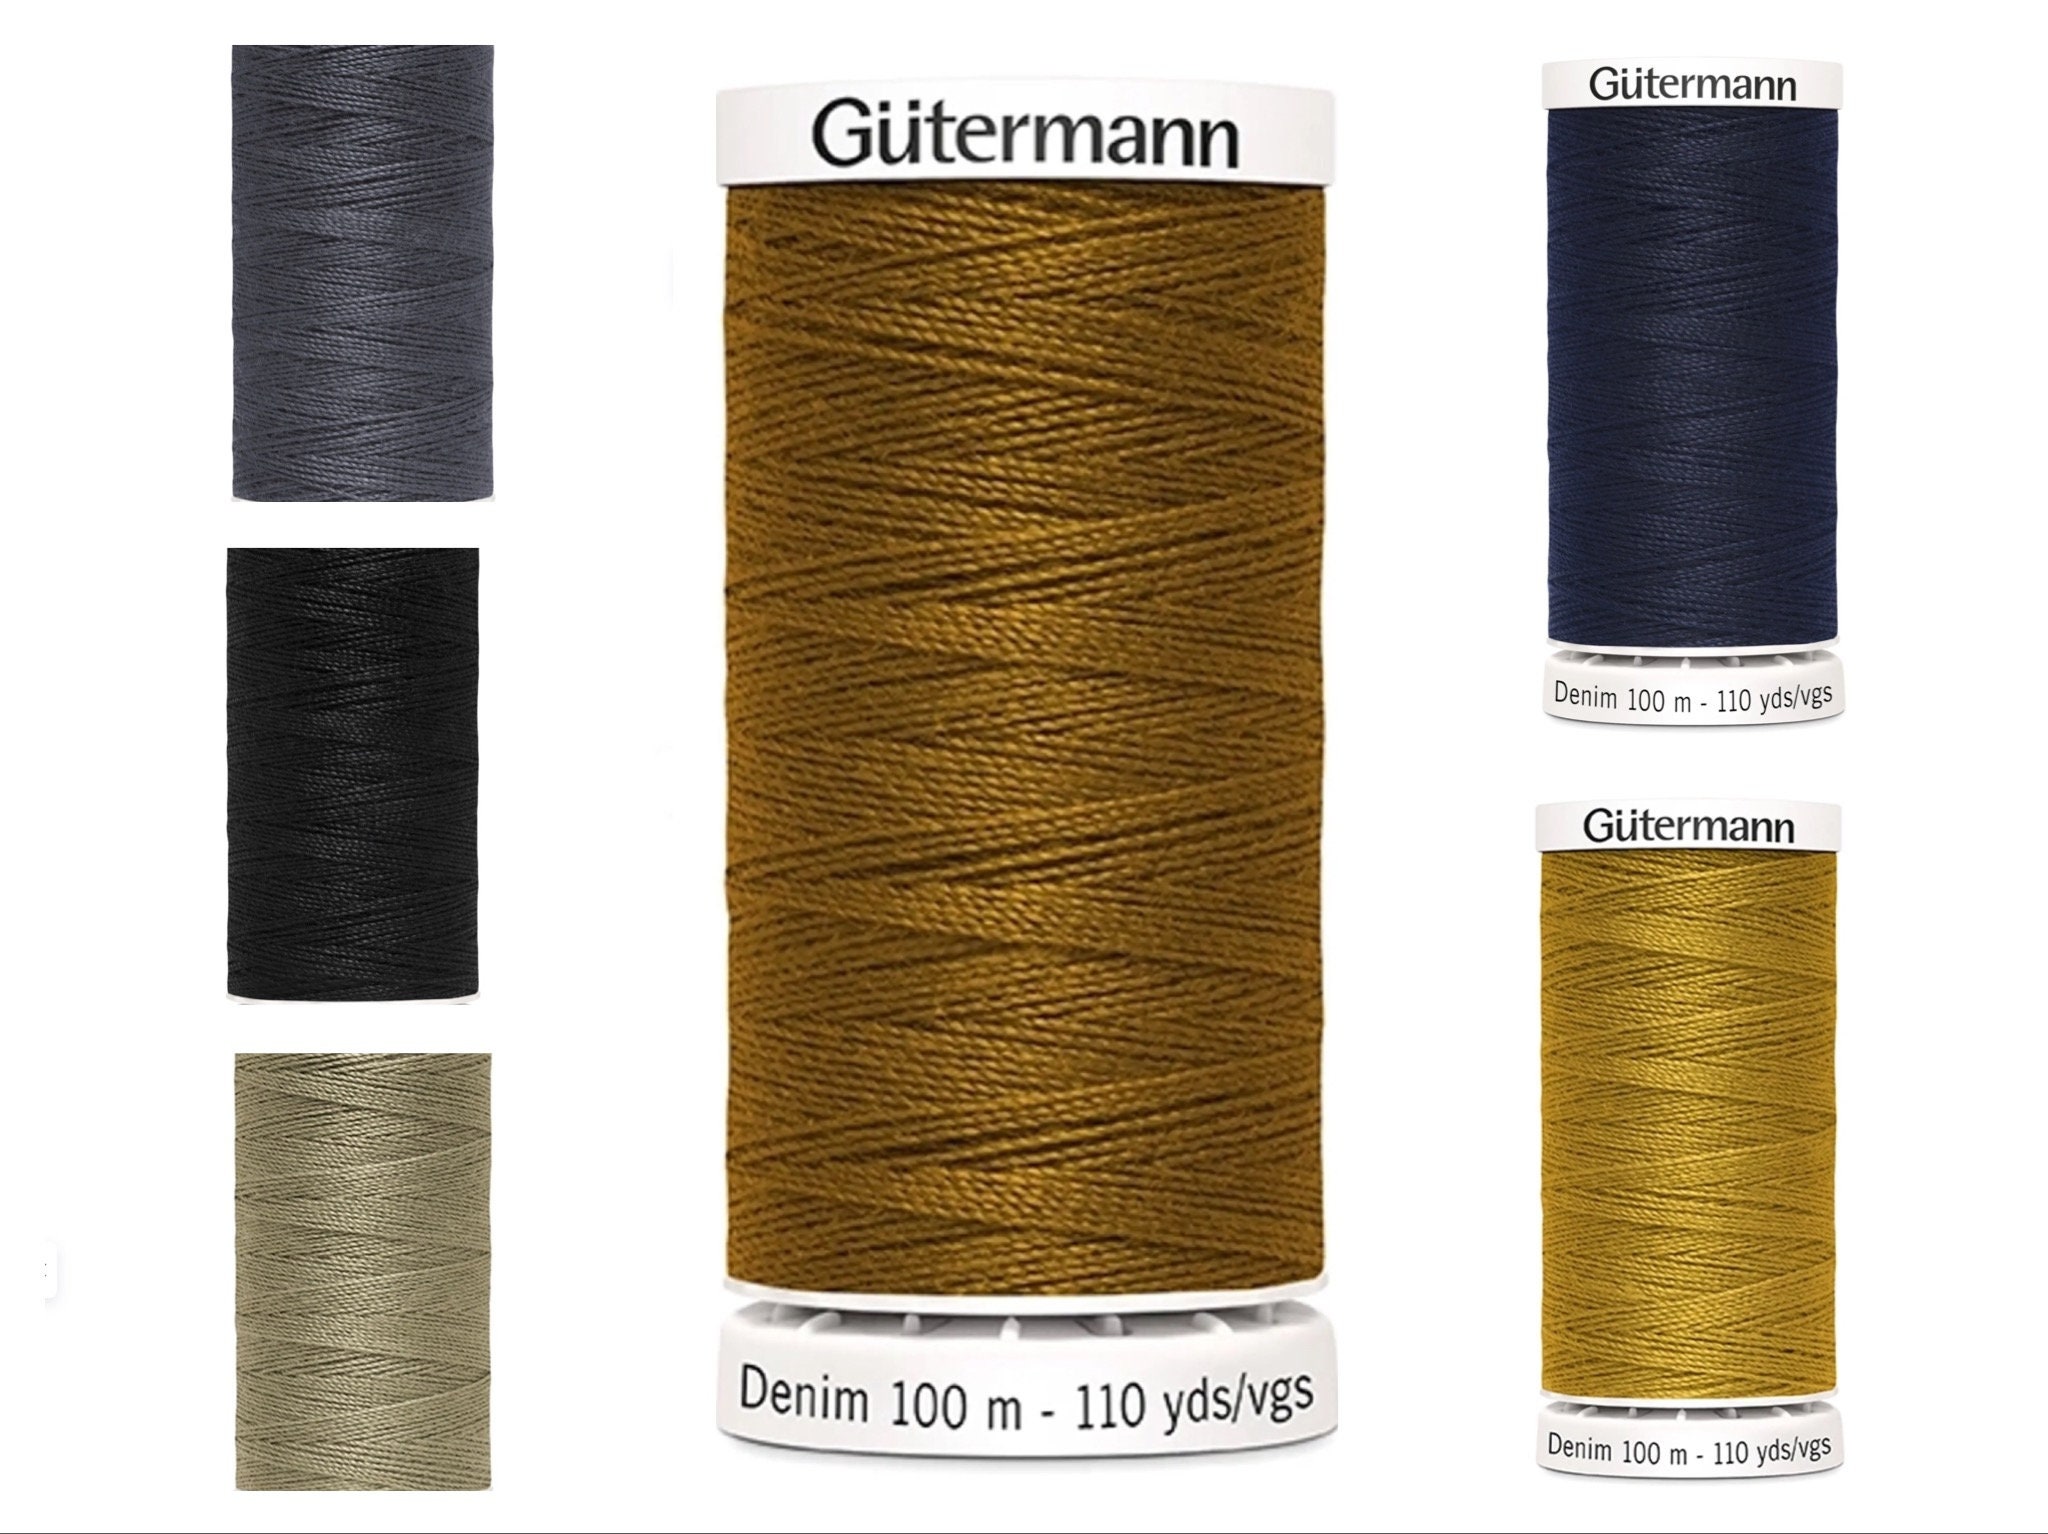 Gütermann Denim Sewing Thread, Jeans Thread, Size 50 